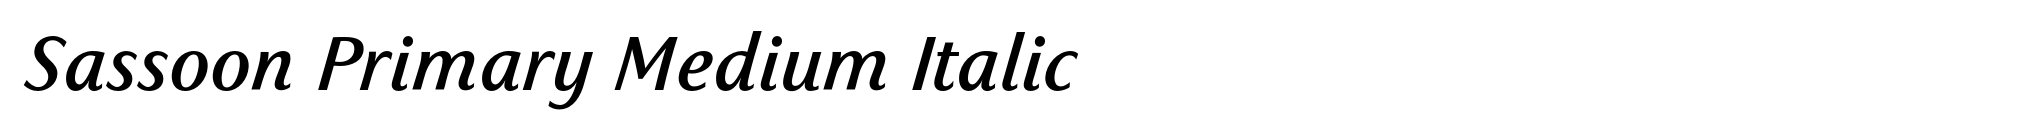 Sassoon Primary Medium Italic image